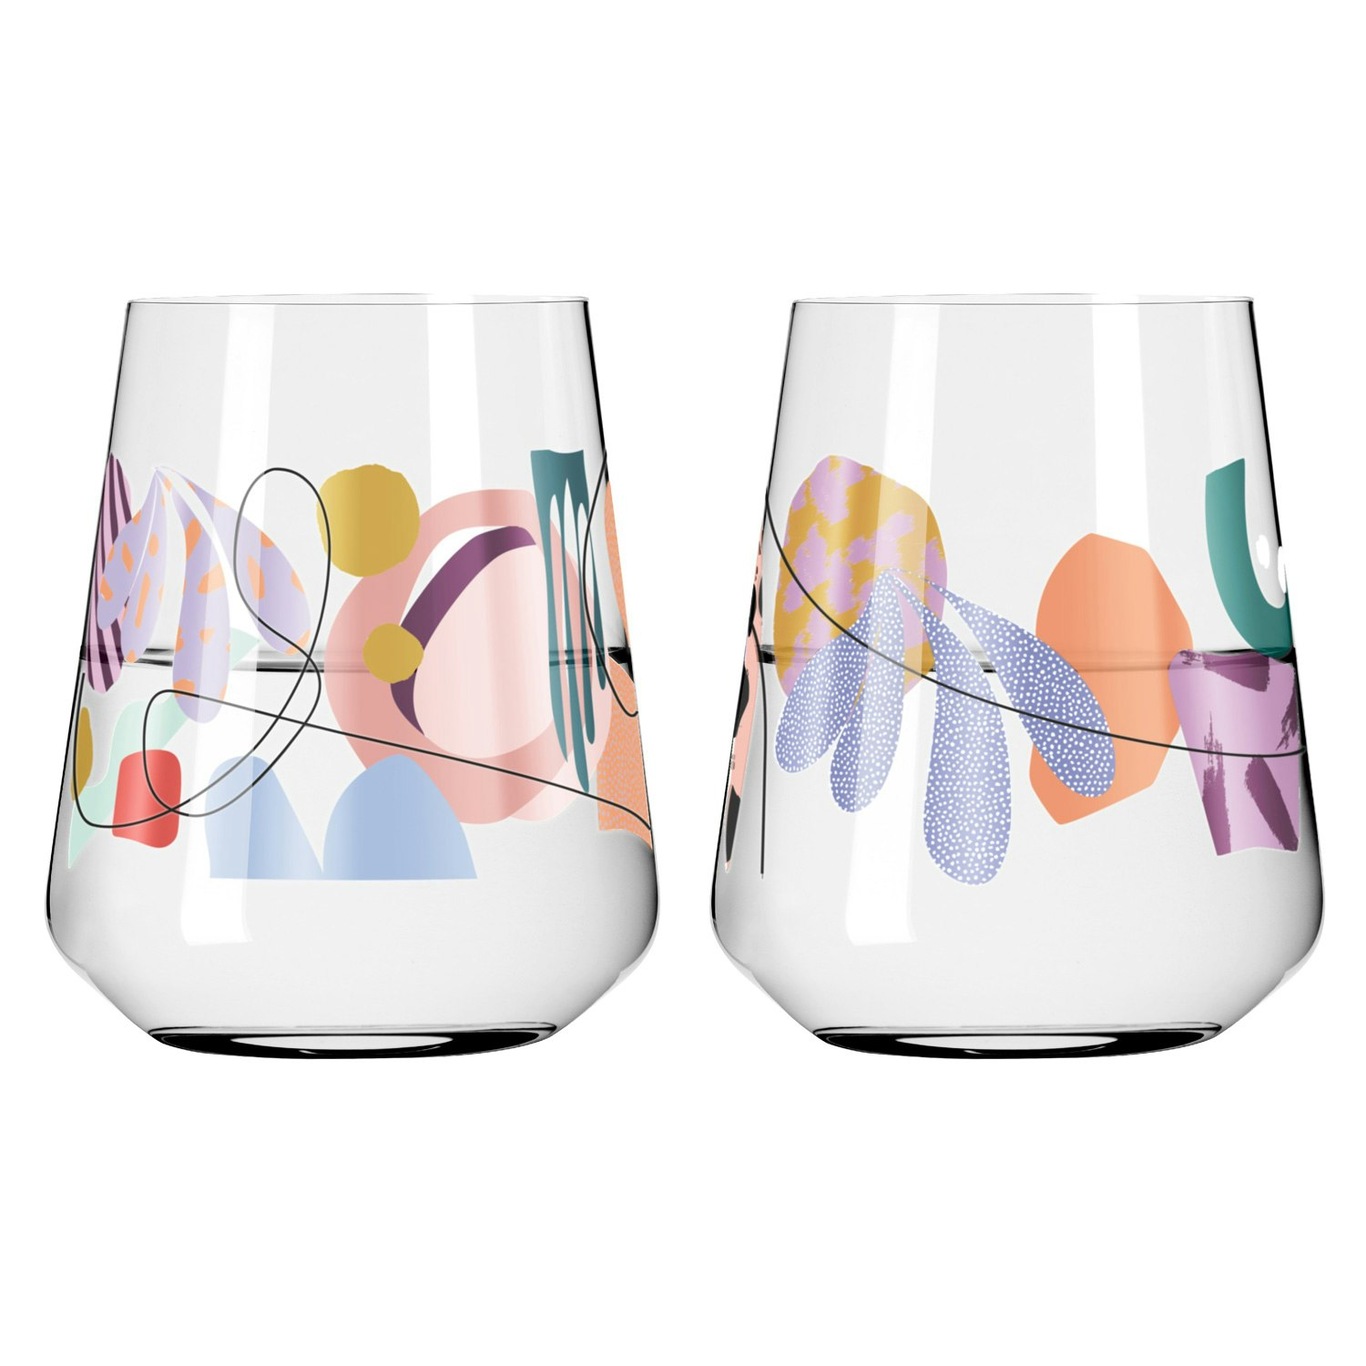 https://royaldesign.com/image/2/ritzenhoff-sommerrausch-drinking-glasses-50-cl-2-pack-0?w=800&quality=80